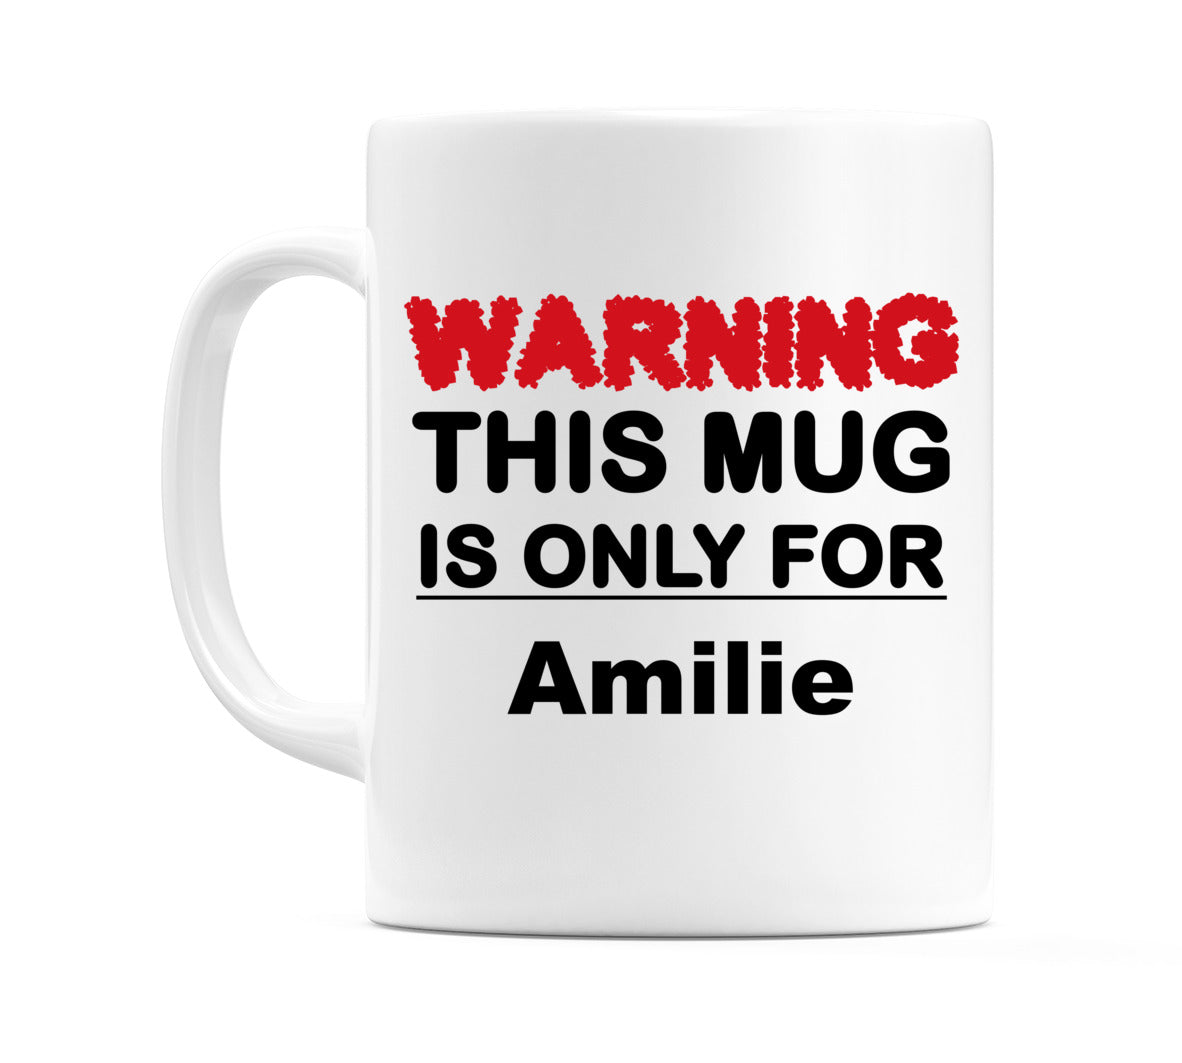 Warning This Mug is ONLY for Amilie Mug